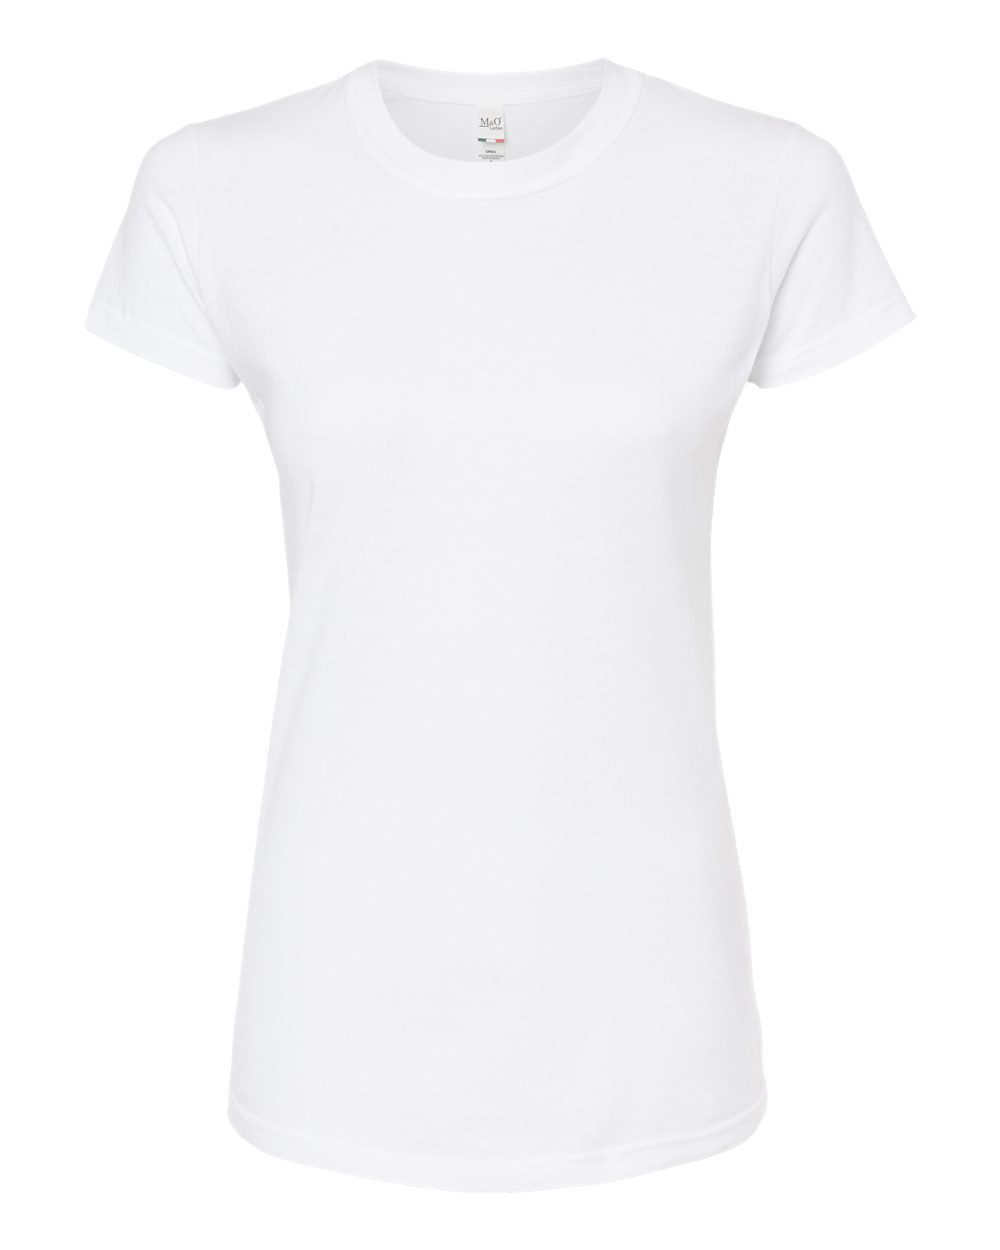 Fine Jersey - Ladies T-Shirt - M&O 4513